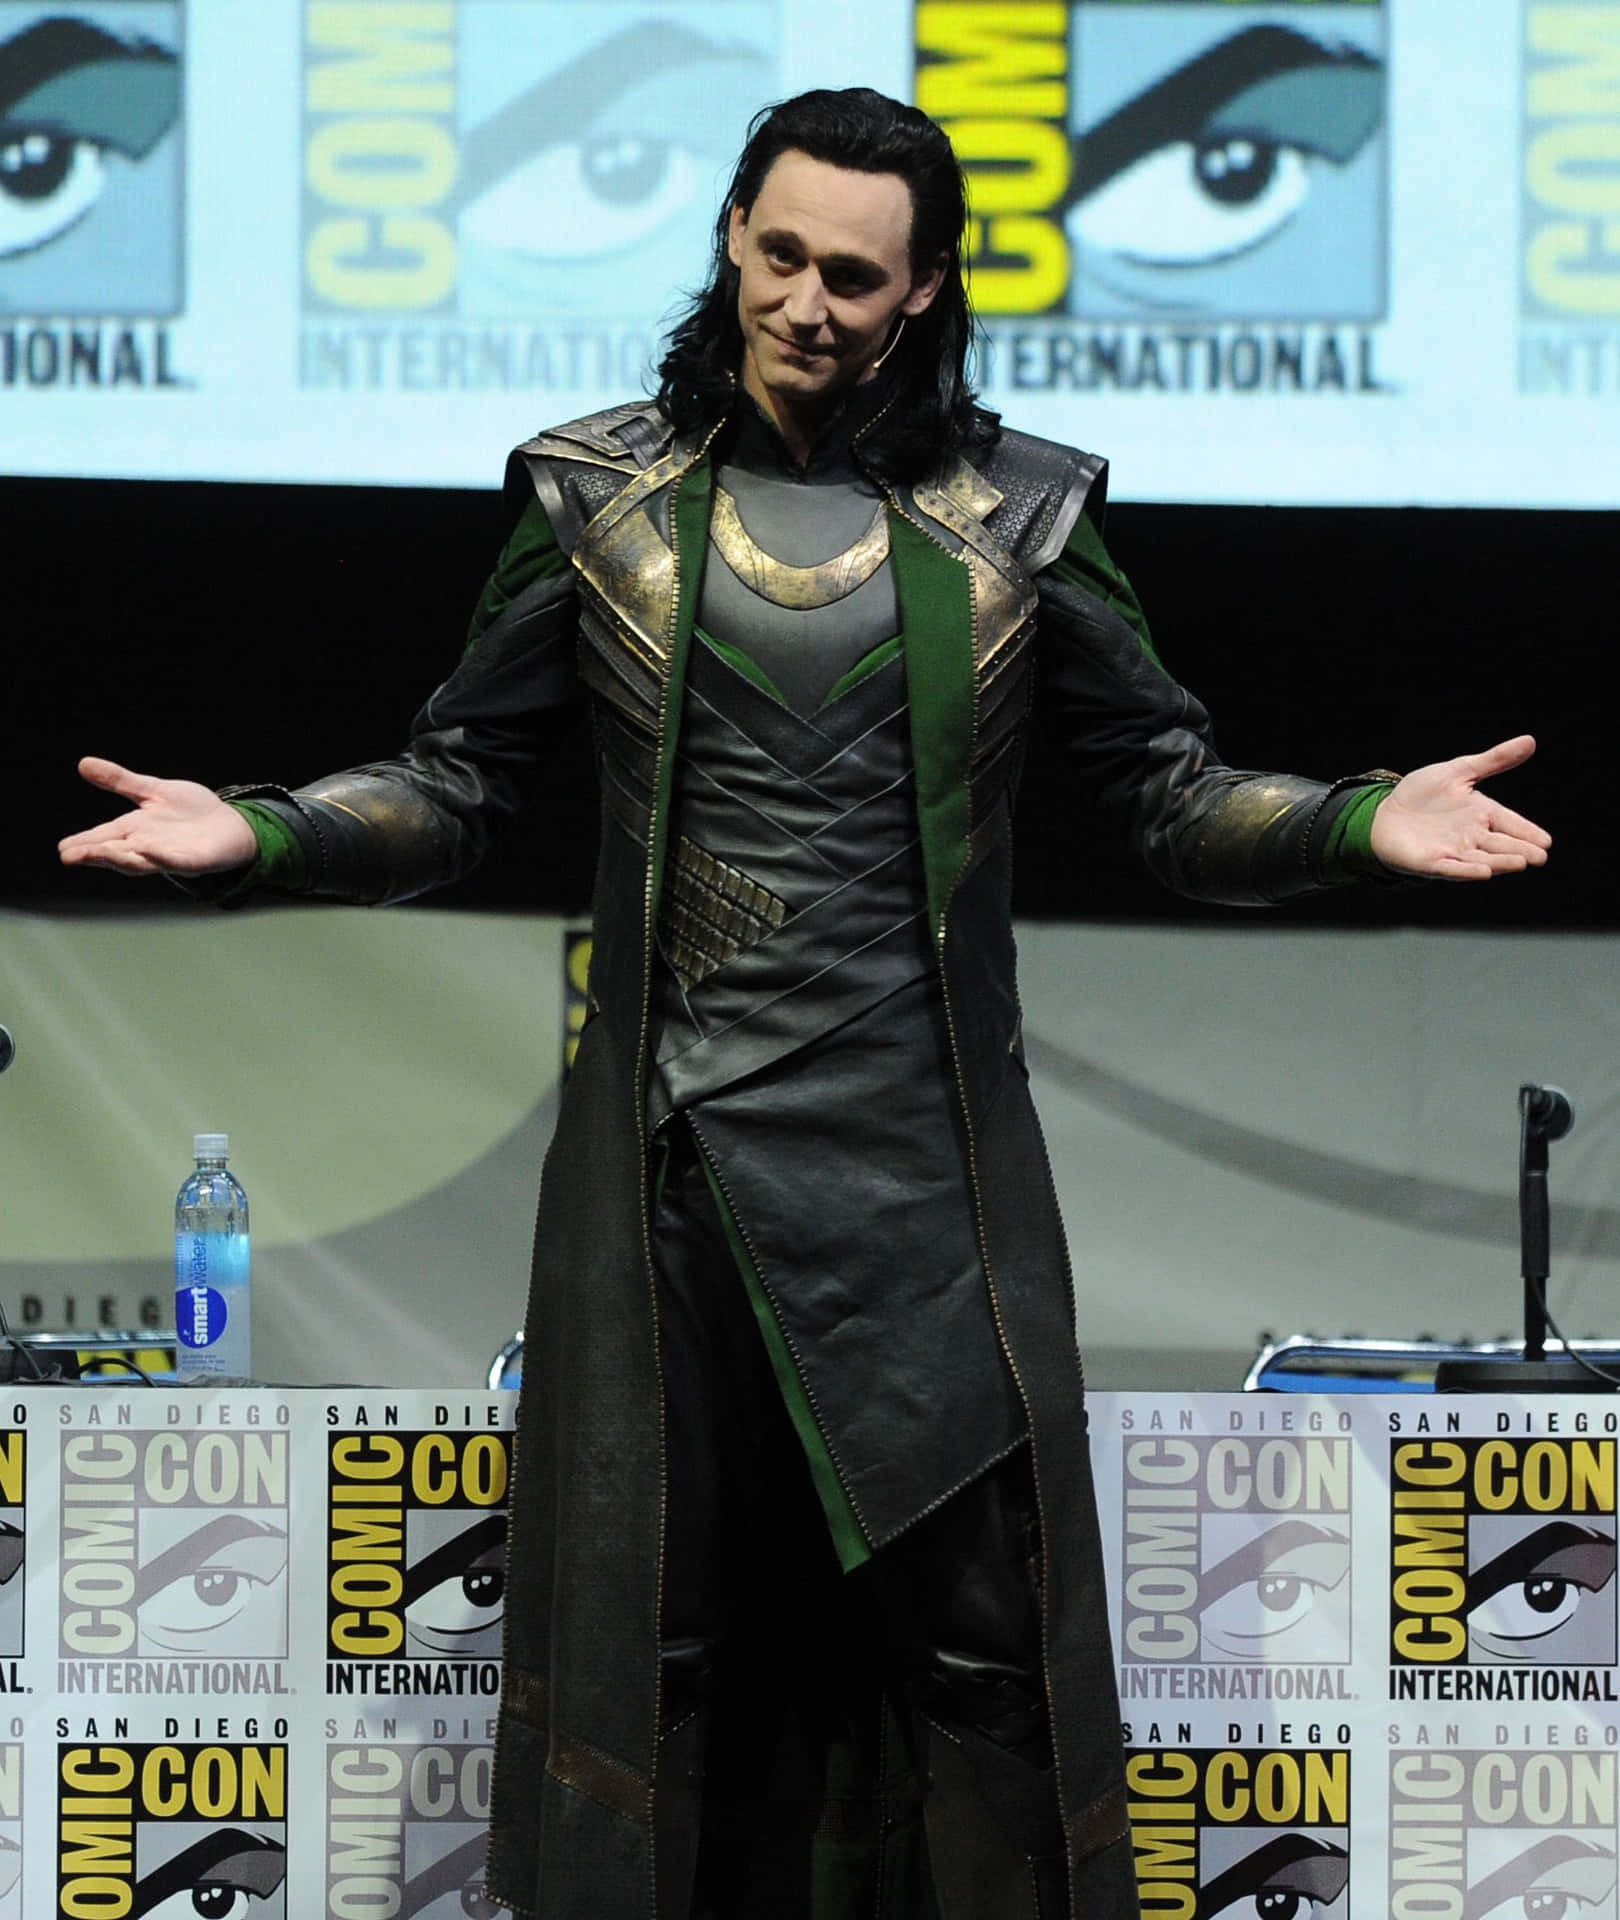 Loki - The Cunning God of Mischief